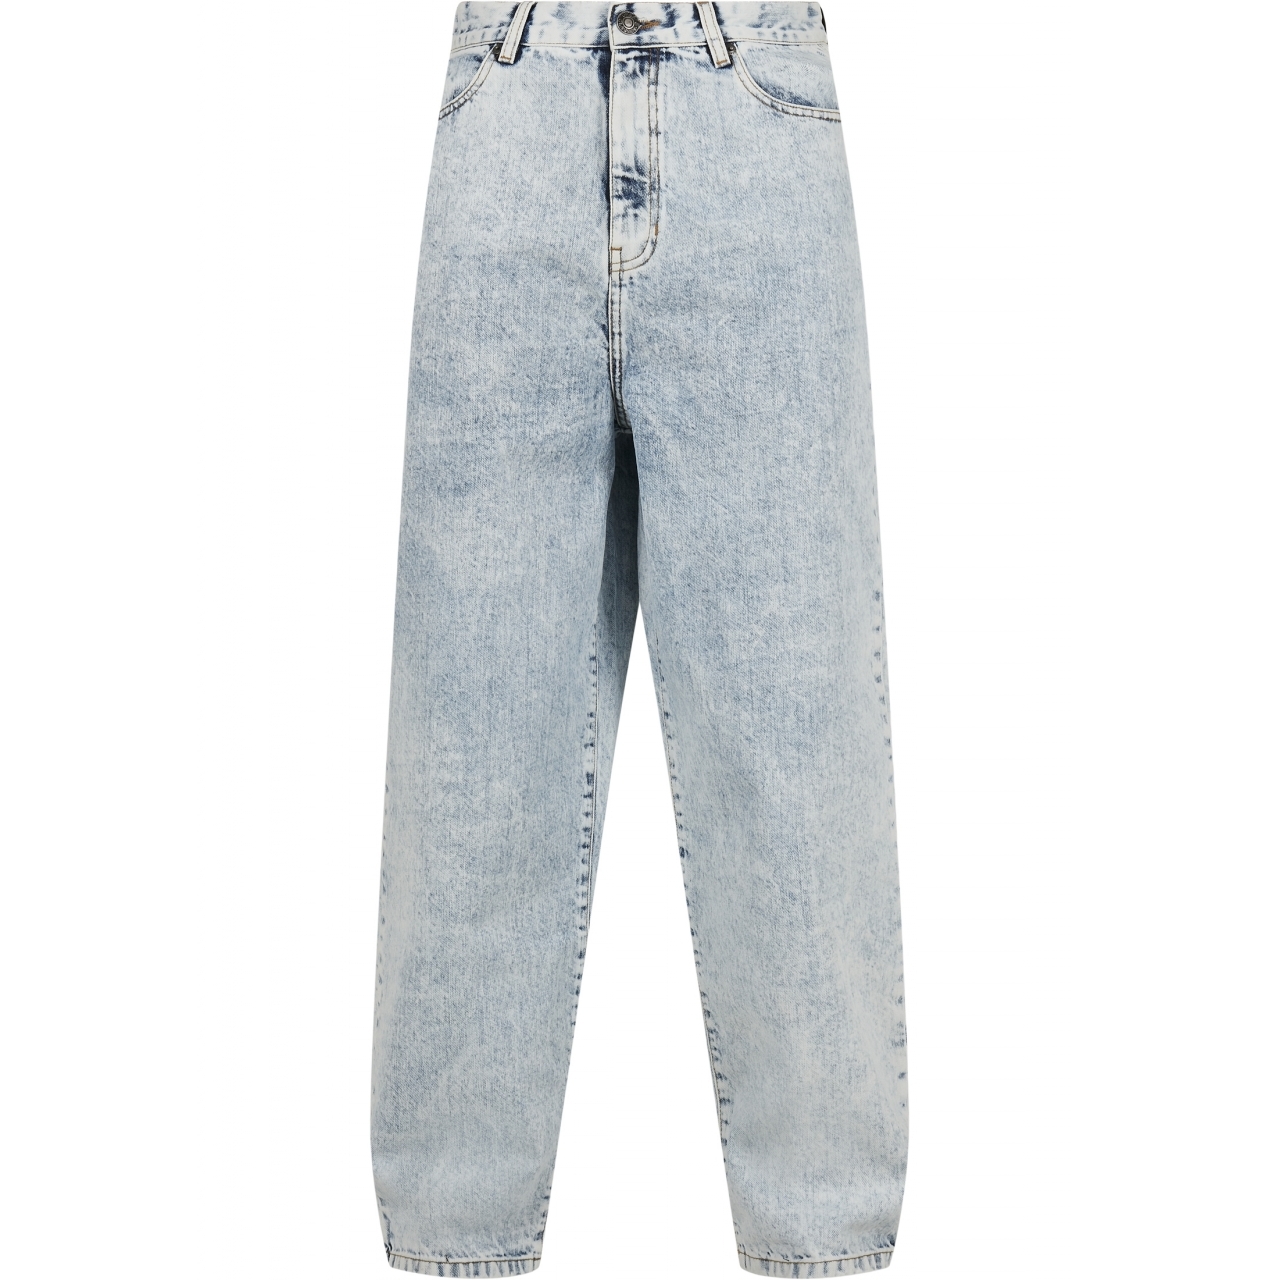 Džíny Urban Classics 90s Jeans - modré, 36